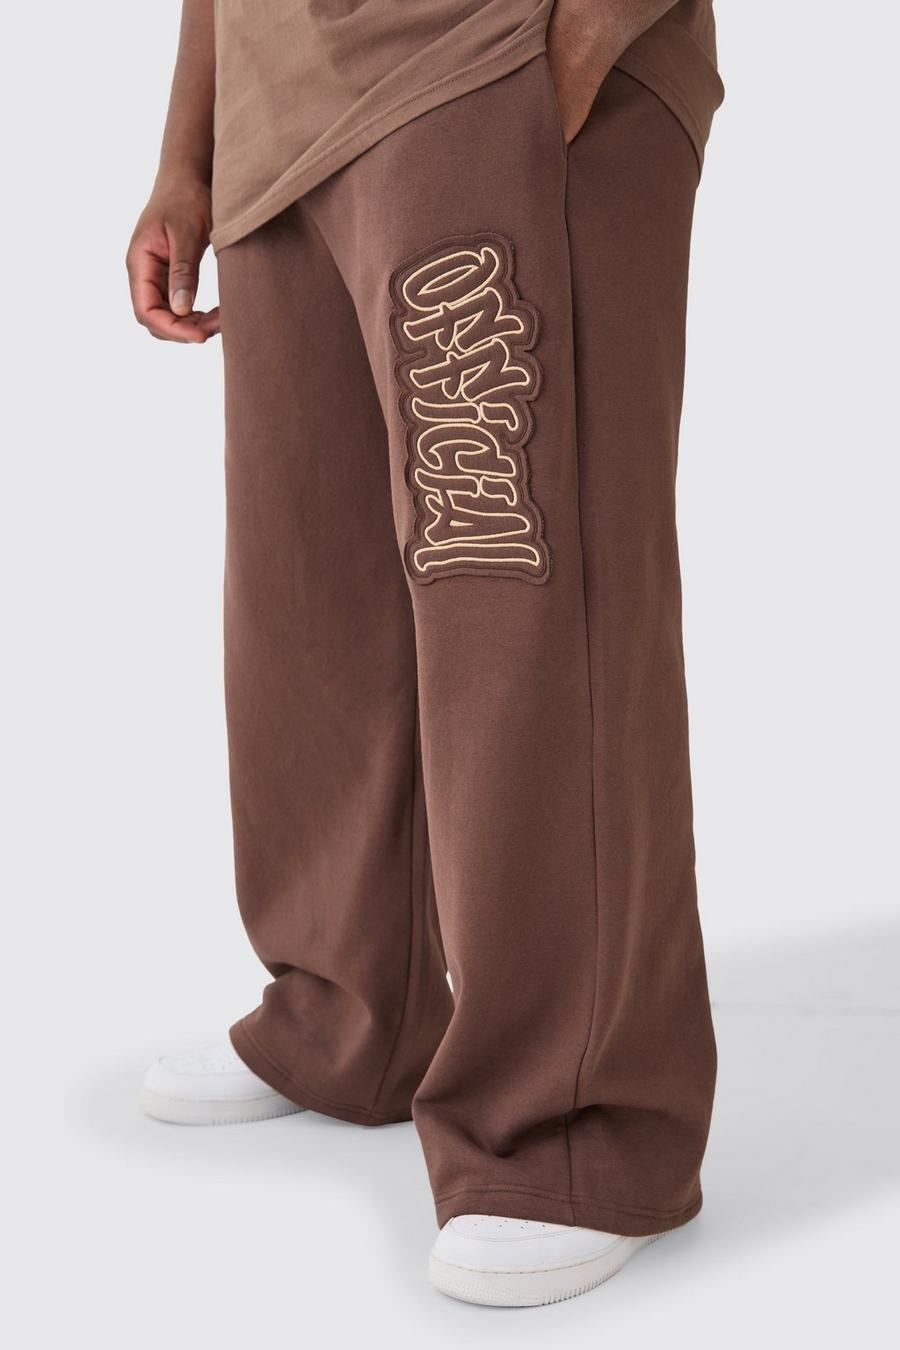 Pantaloni tuta Plus Size a calzata ampia Official con applique, Chocolate